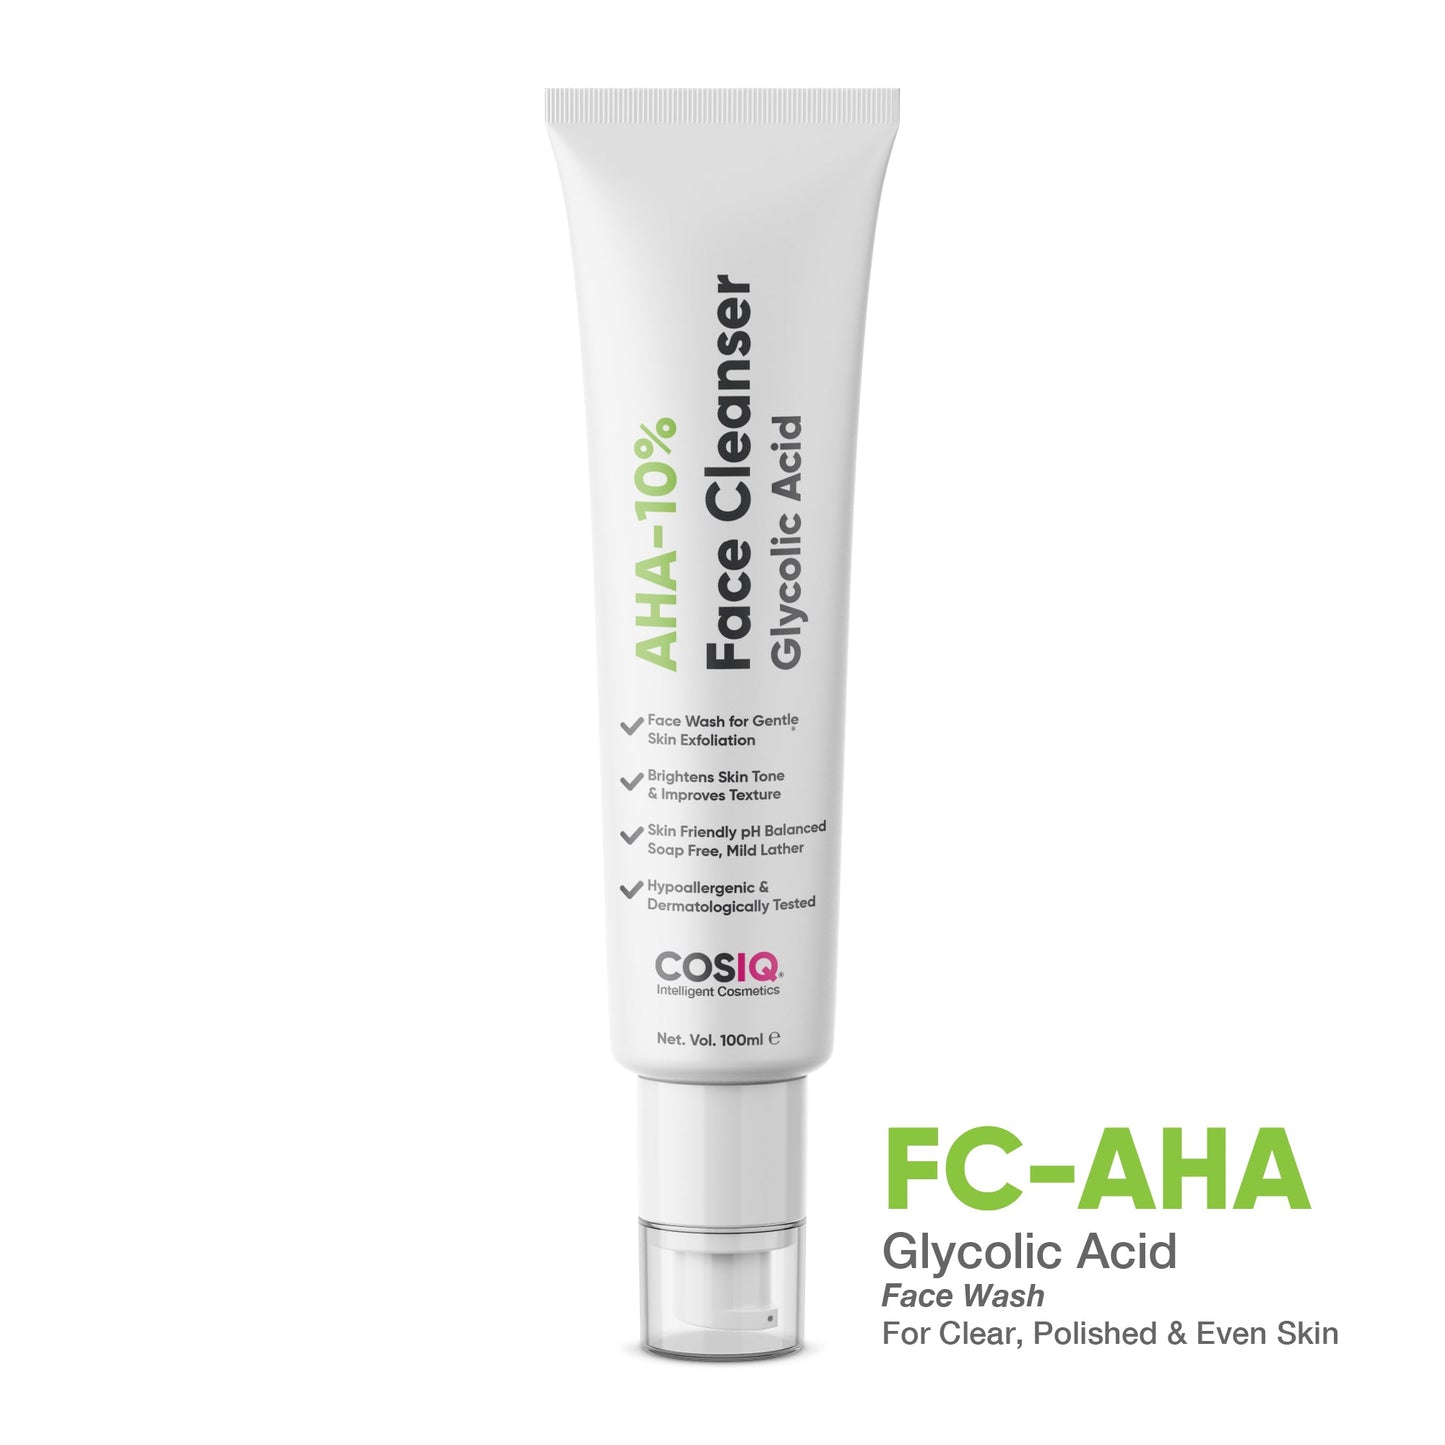 Glycolic Acid Face Cleanser AHA-10%, 100ml - CosIQ